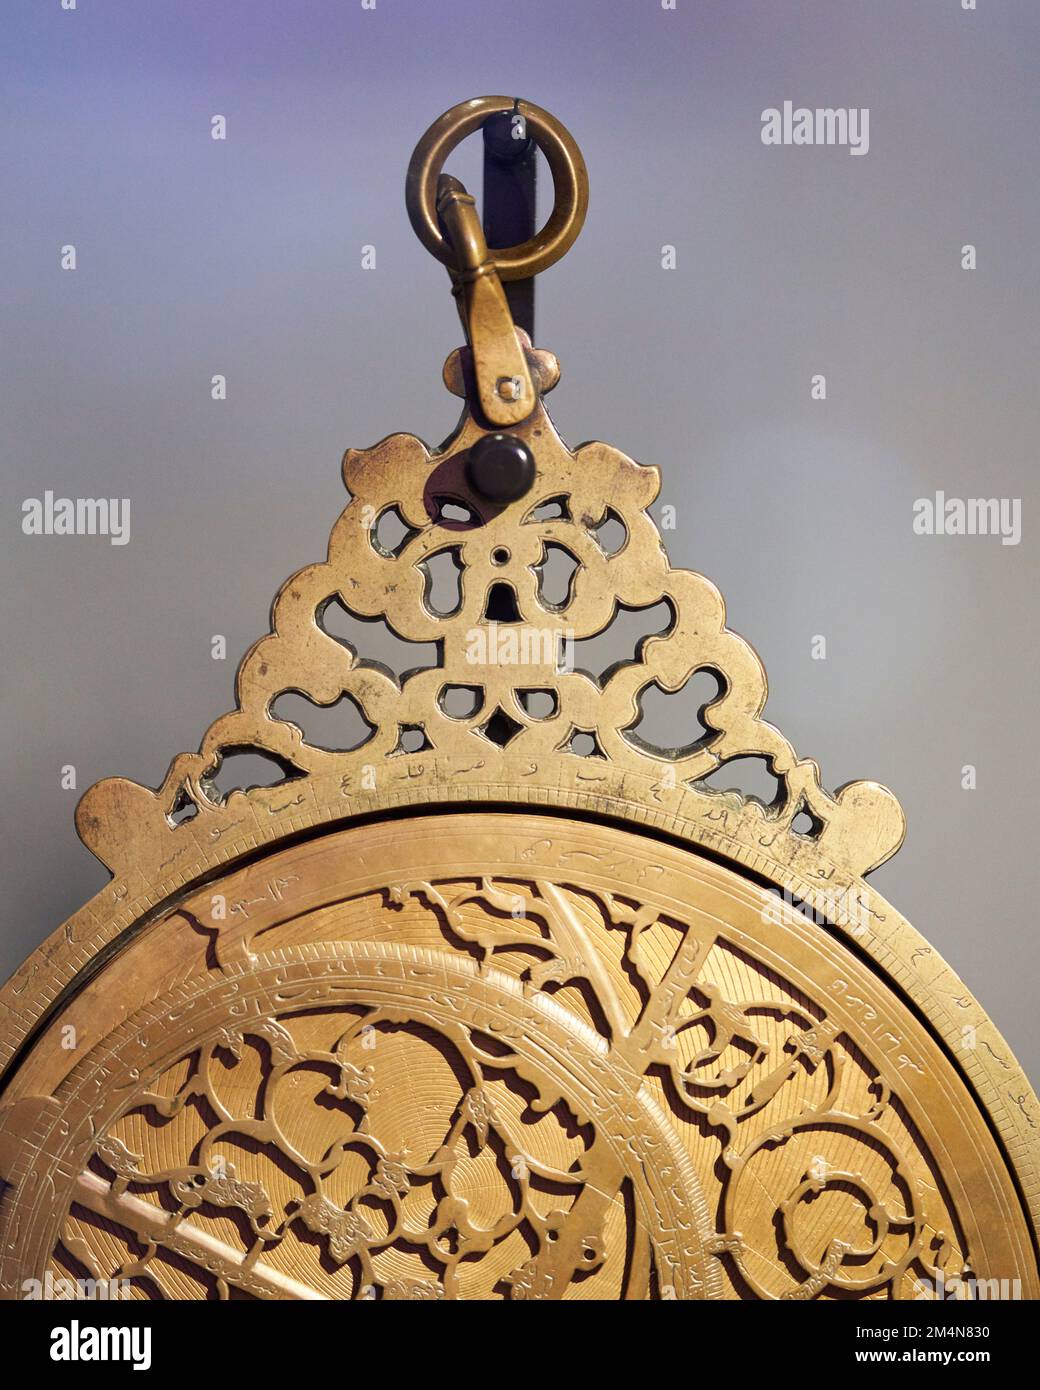 17th Centuary Astrolabe by Jamal al-Din ibn Muqim, detail. Stock Photo